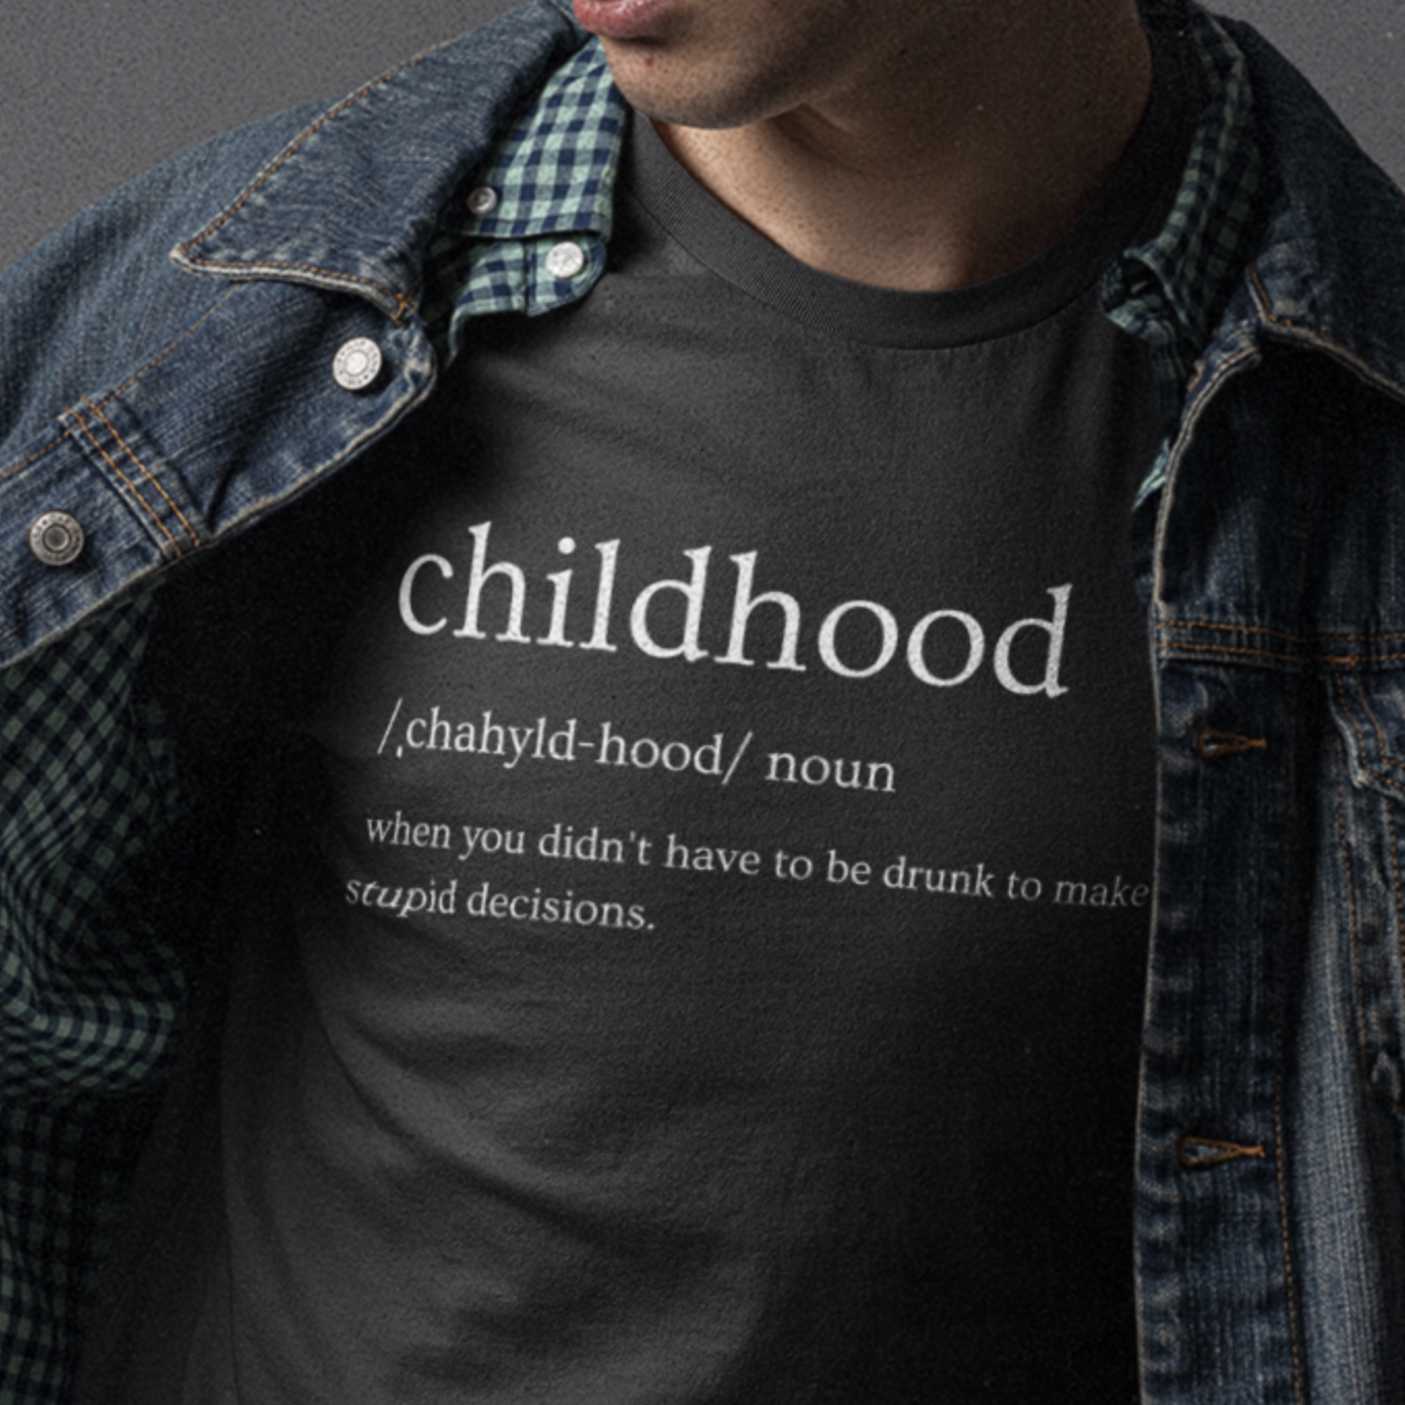 childhood-definition-bella-canvas-t-shirt-on-a-man